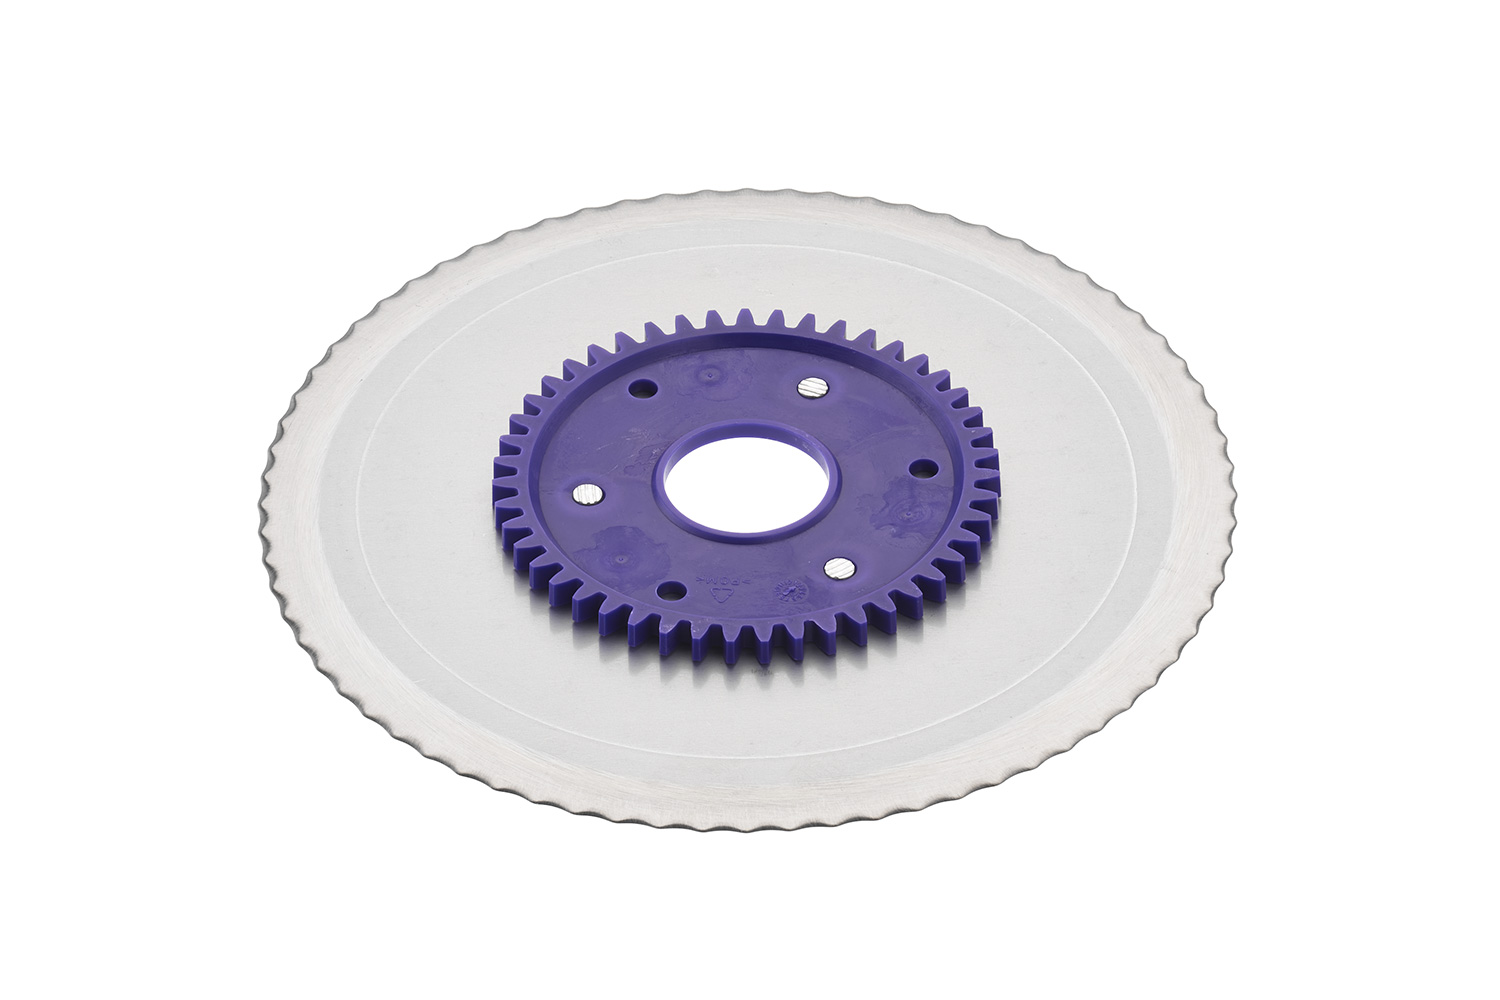 Standard serrated circular blade with a purple gear